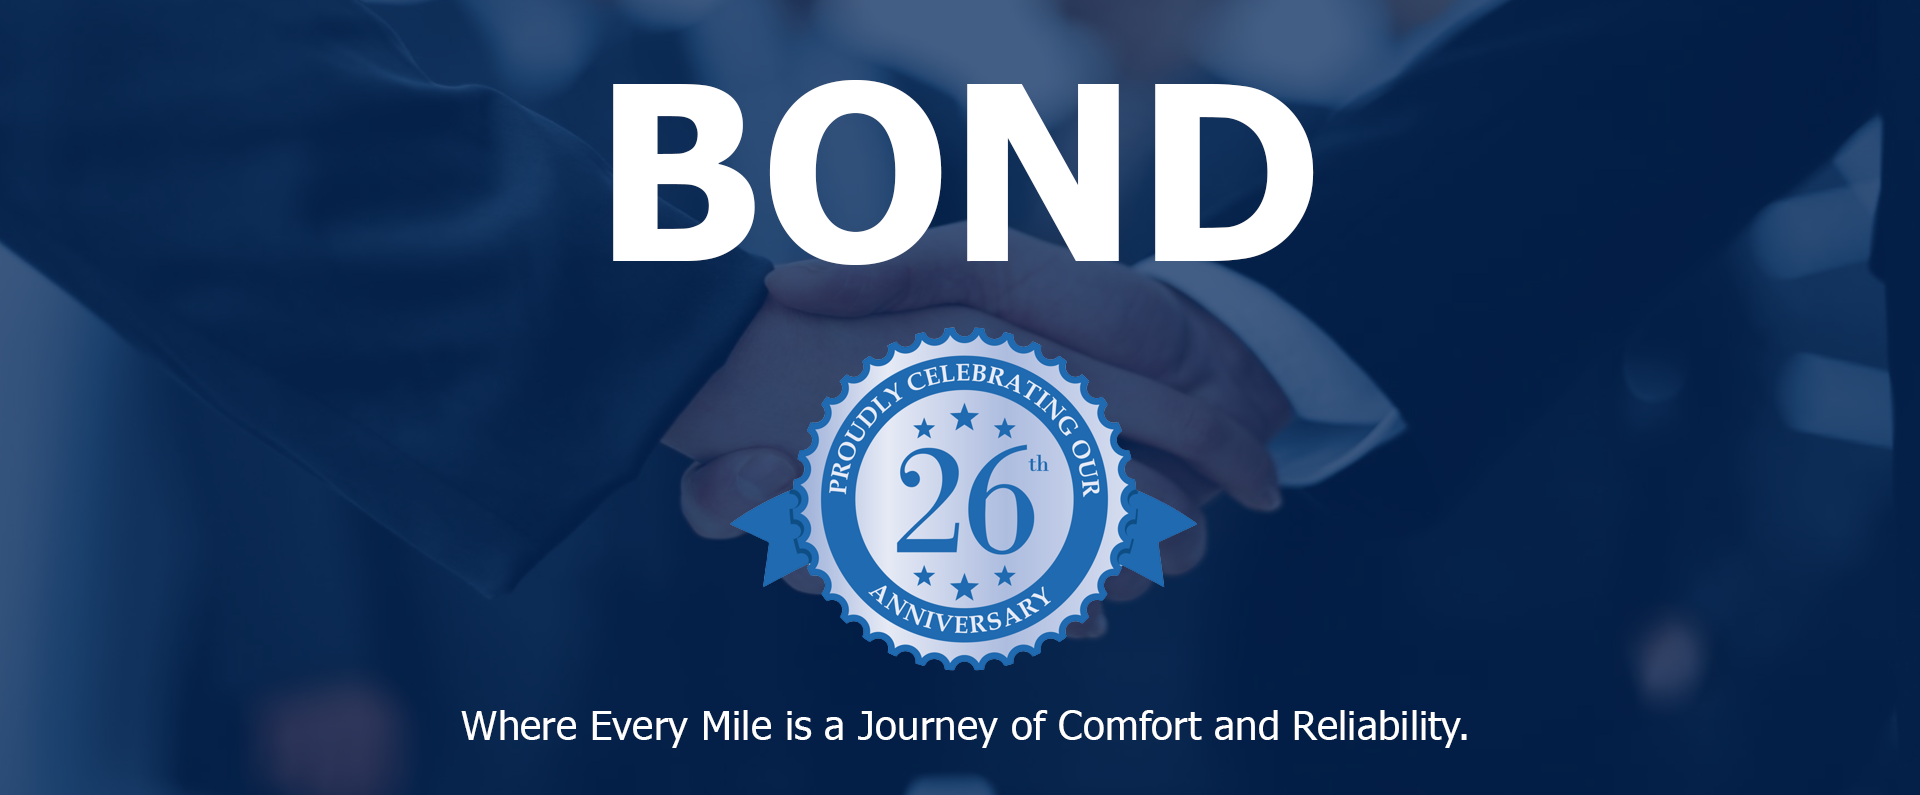 bond limo 26 years